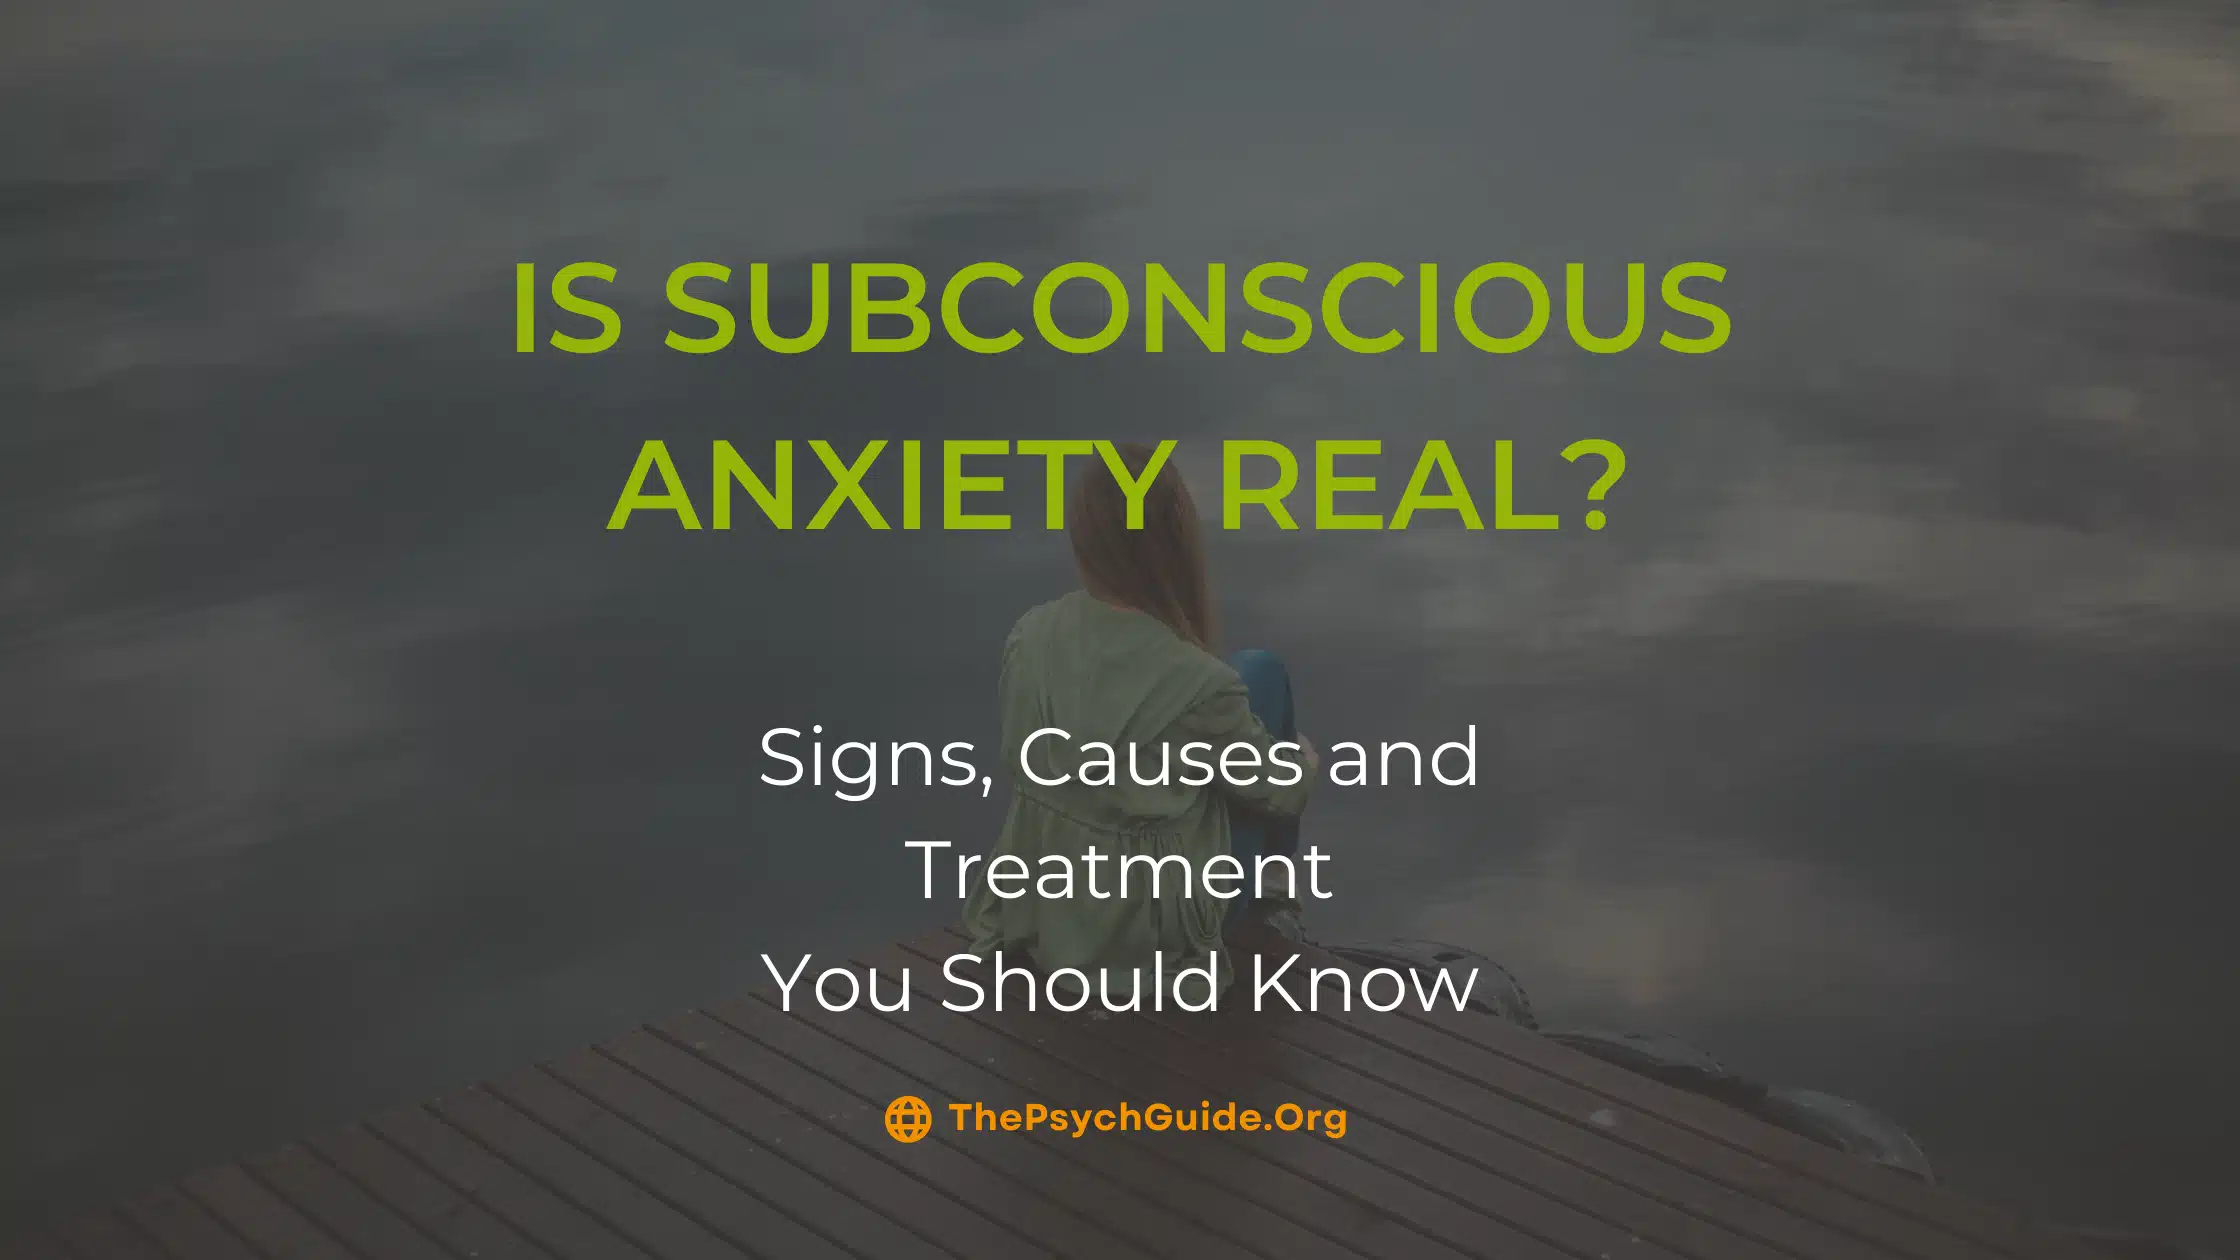 Subconscious anxiety